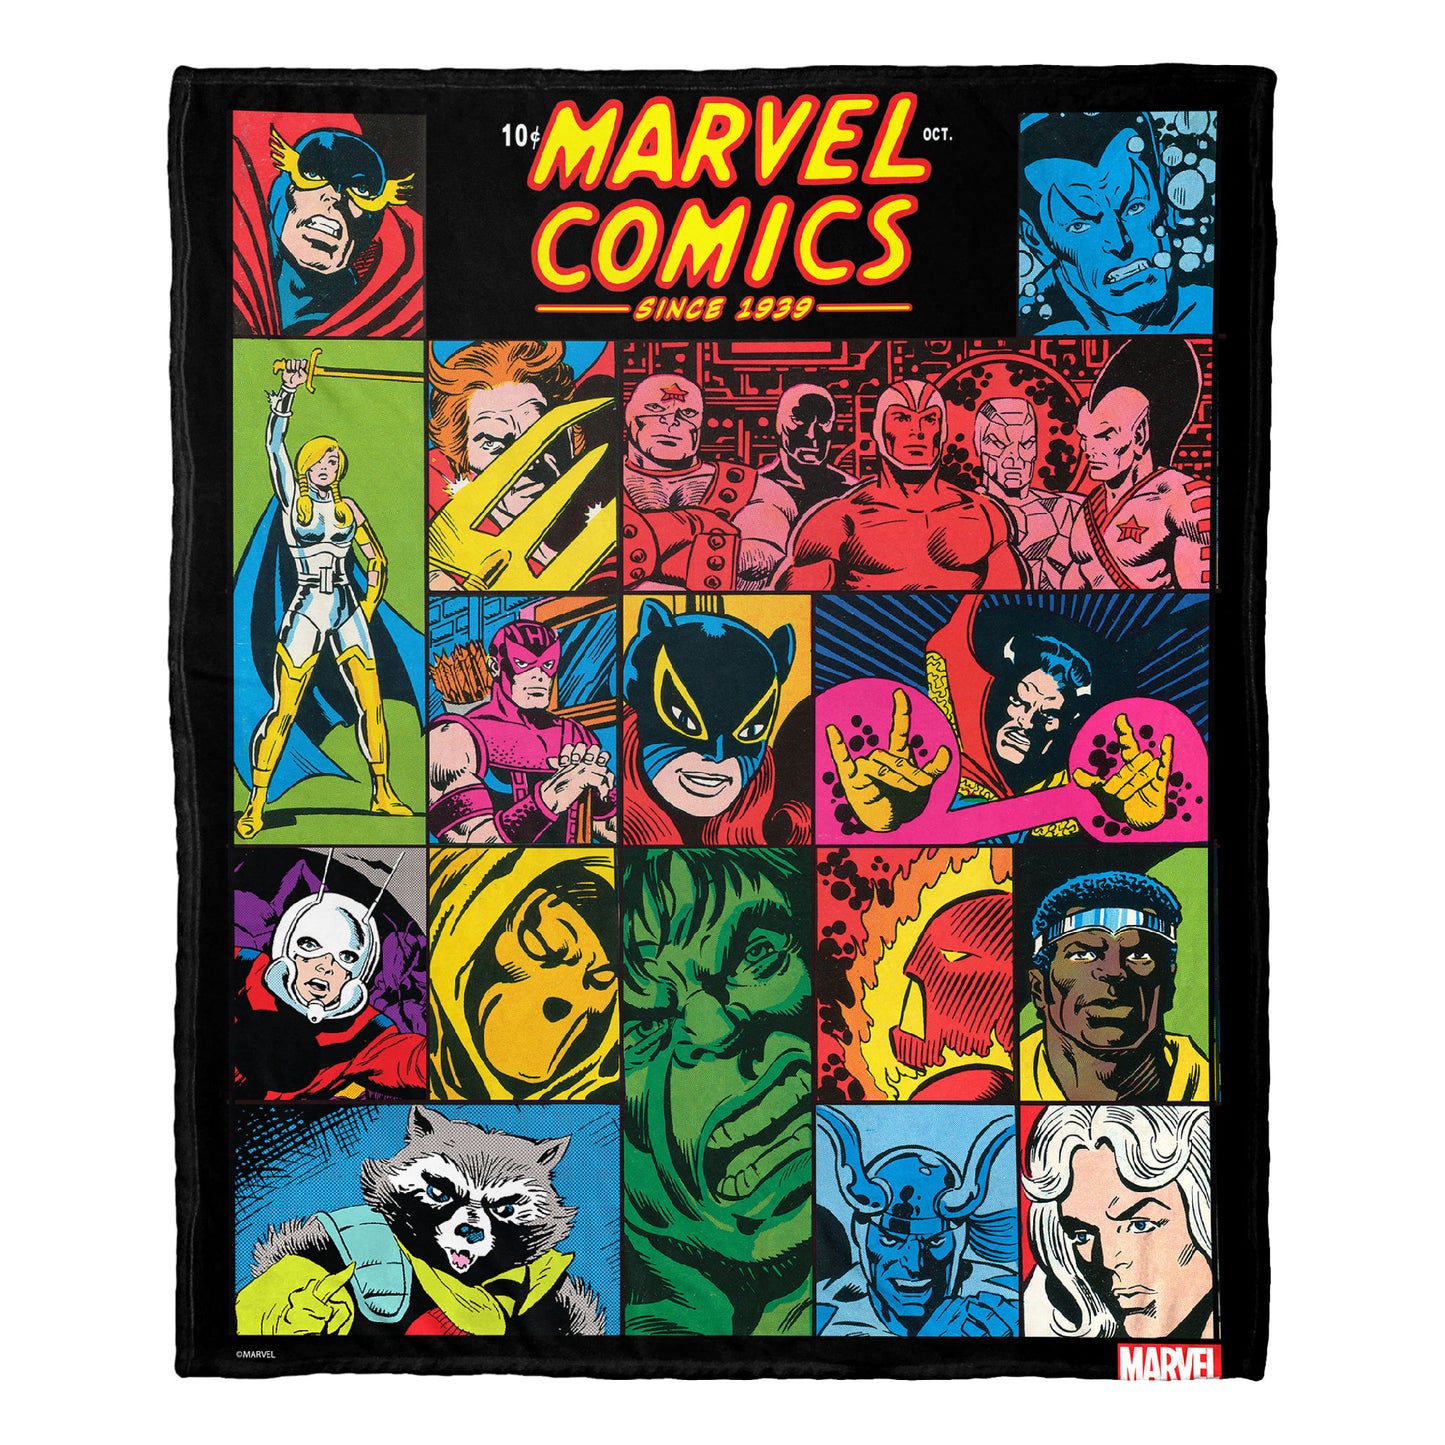 Marvel Comics "Making History" Throw Blanket 50"x60"